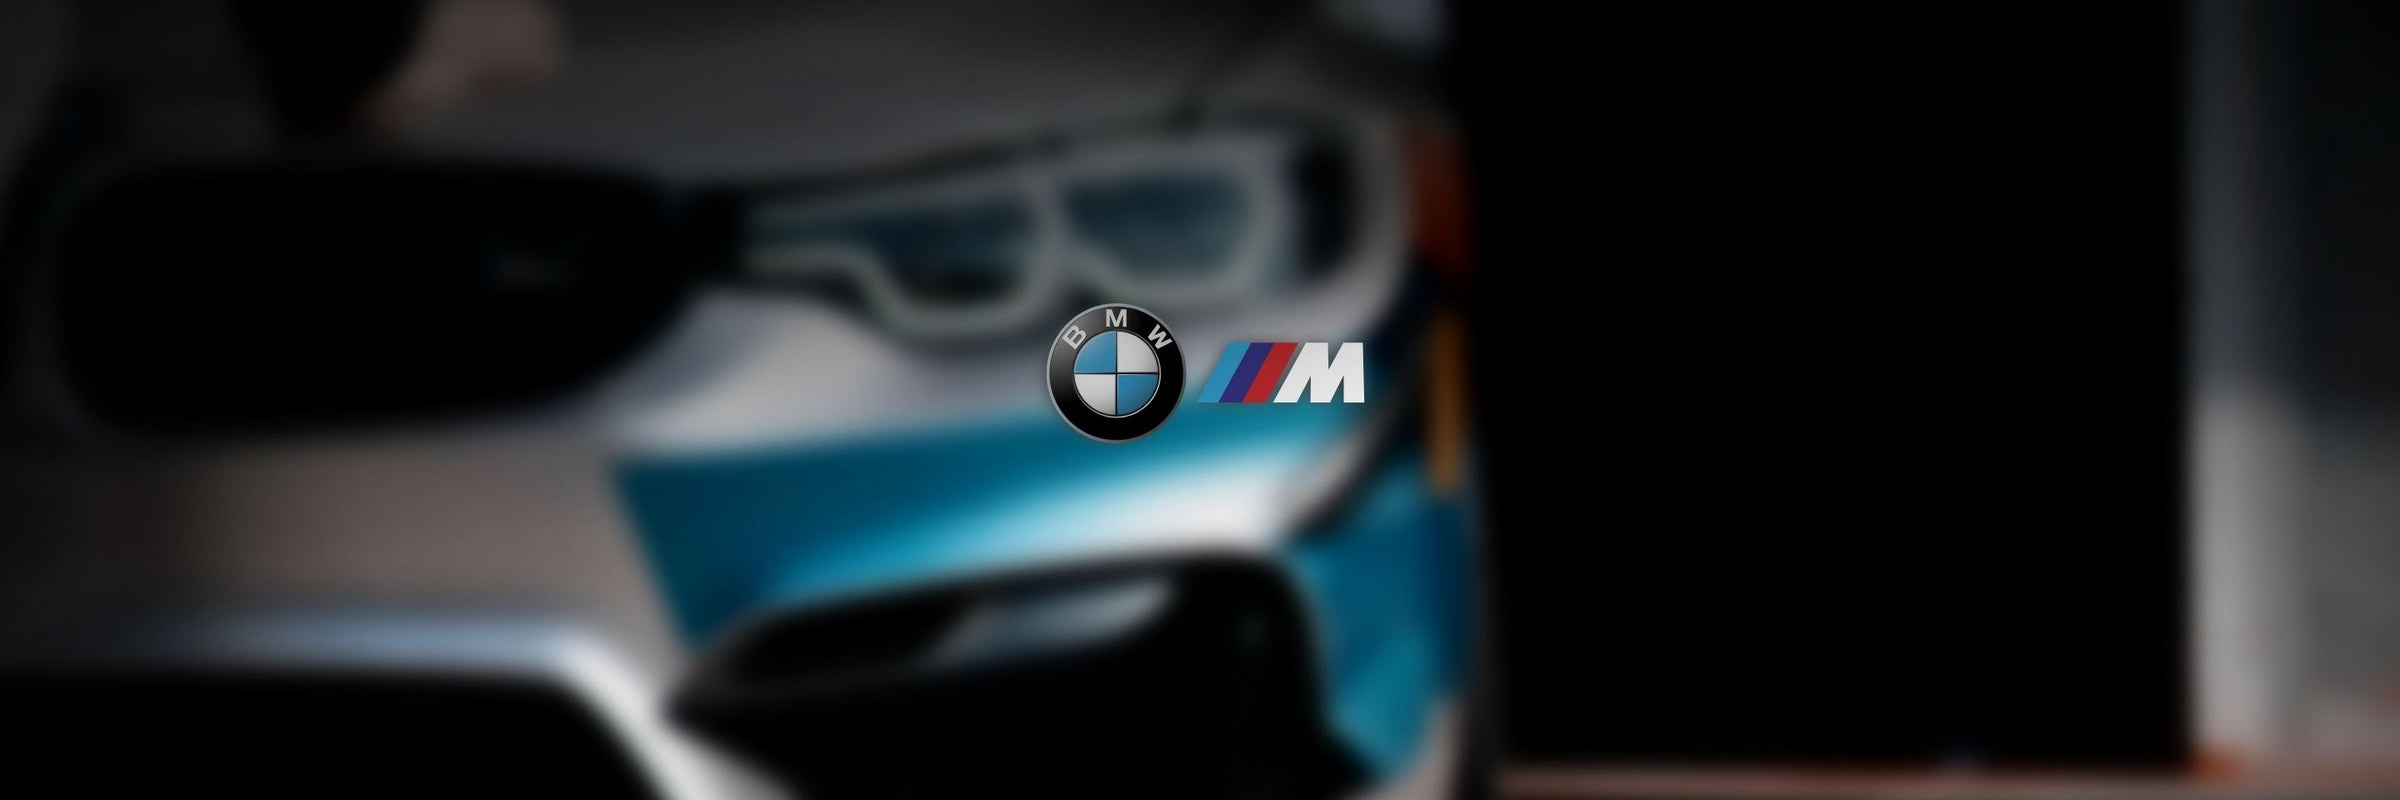 BMW Motorsport - F1 and Motorpsort Offficial Merchandise - Fueler store